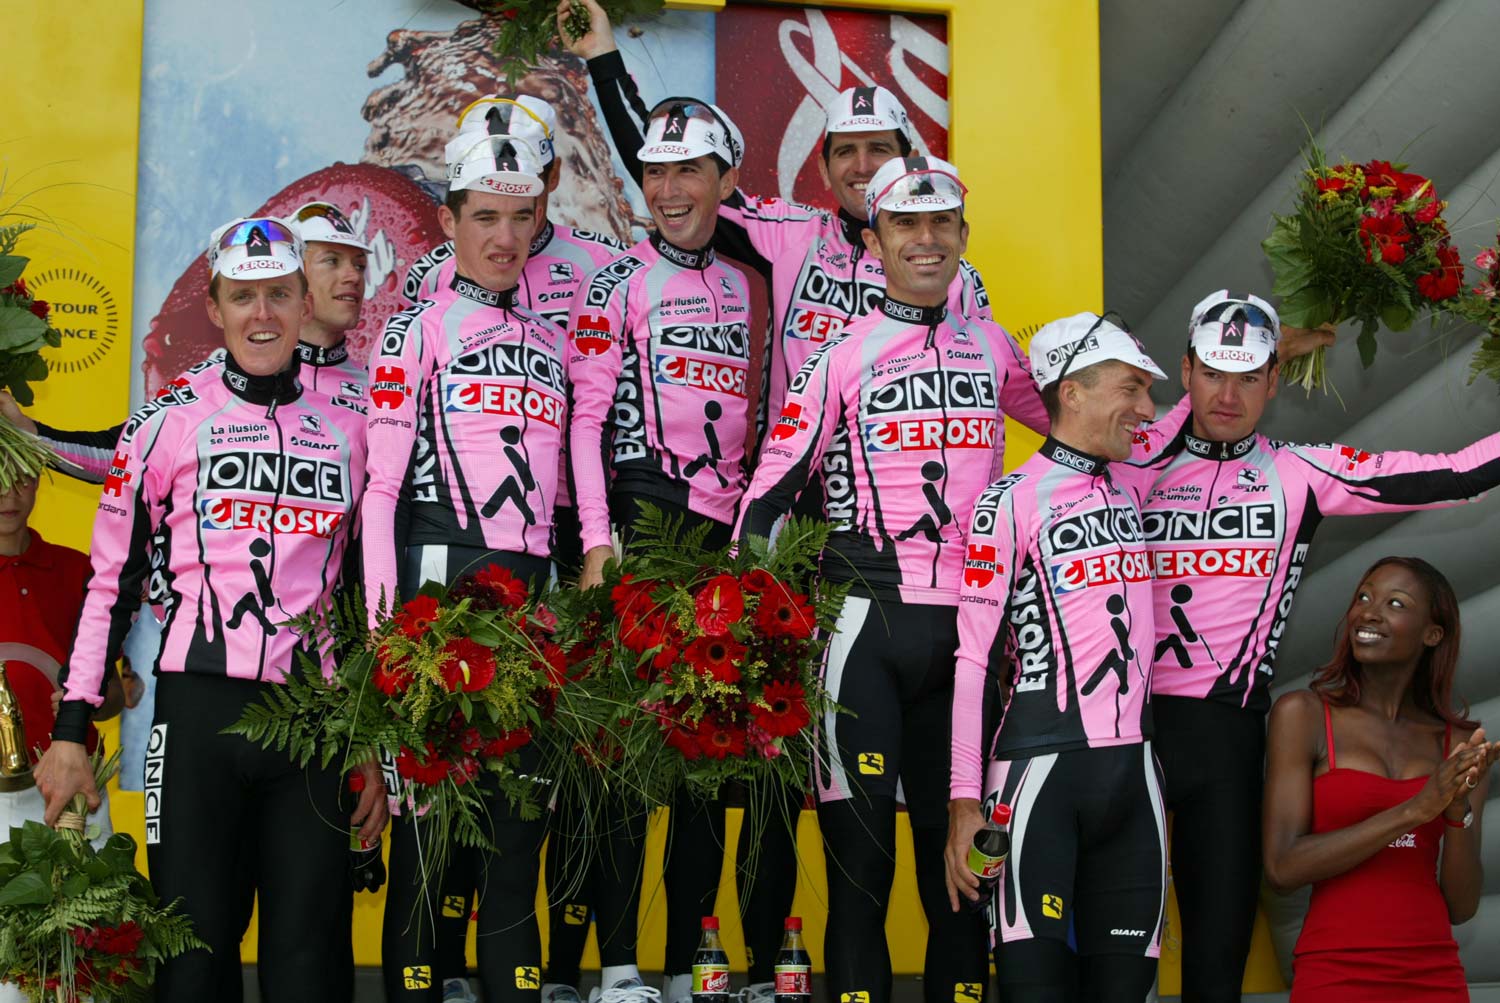 Jaksche (left) on the podium after the team time trial of the 2002 Tour de France. Photo: Yuzuru Sunada